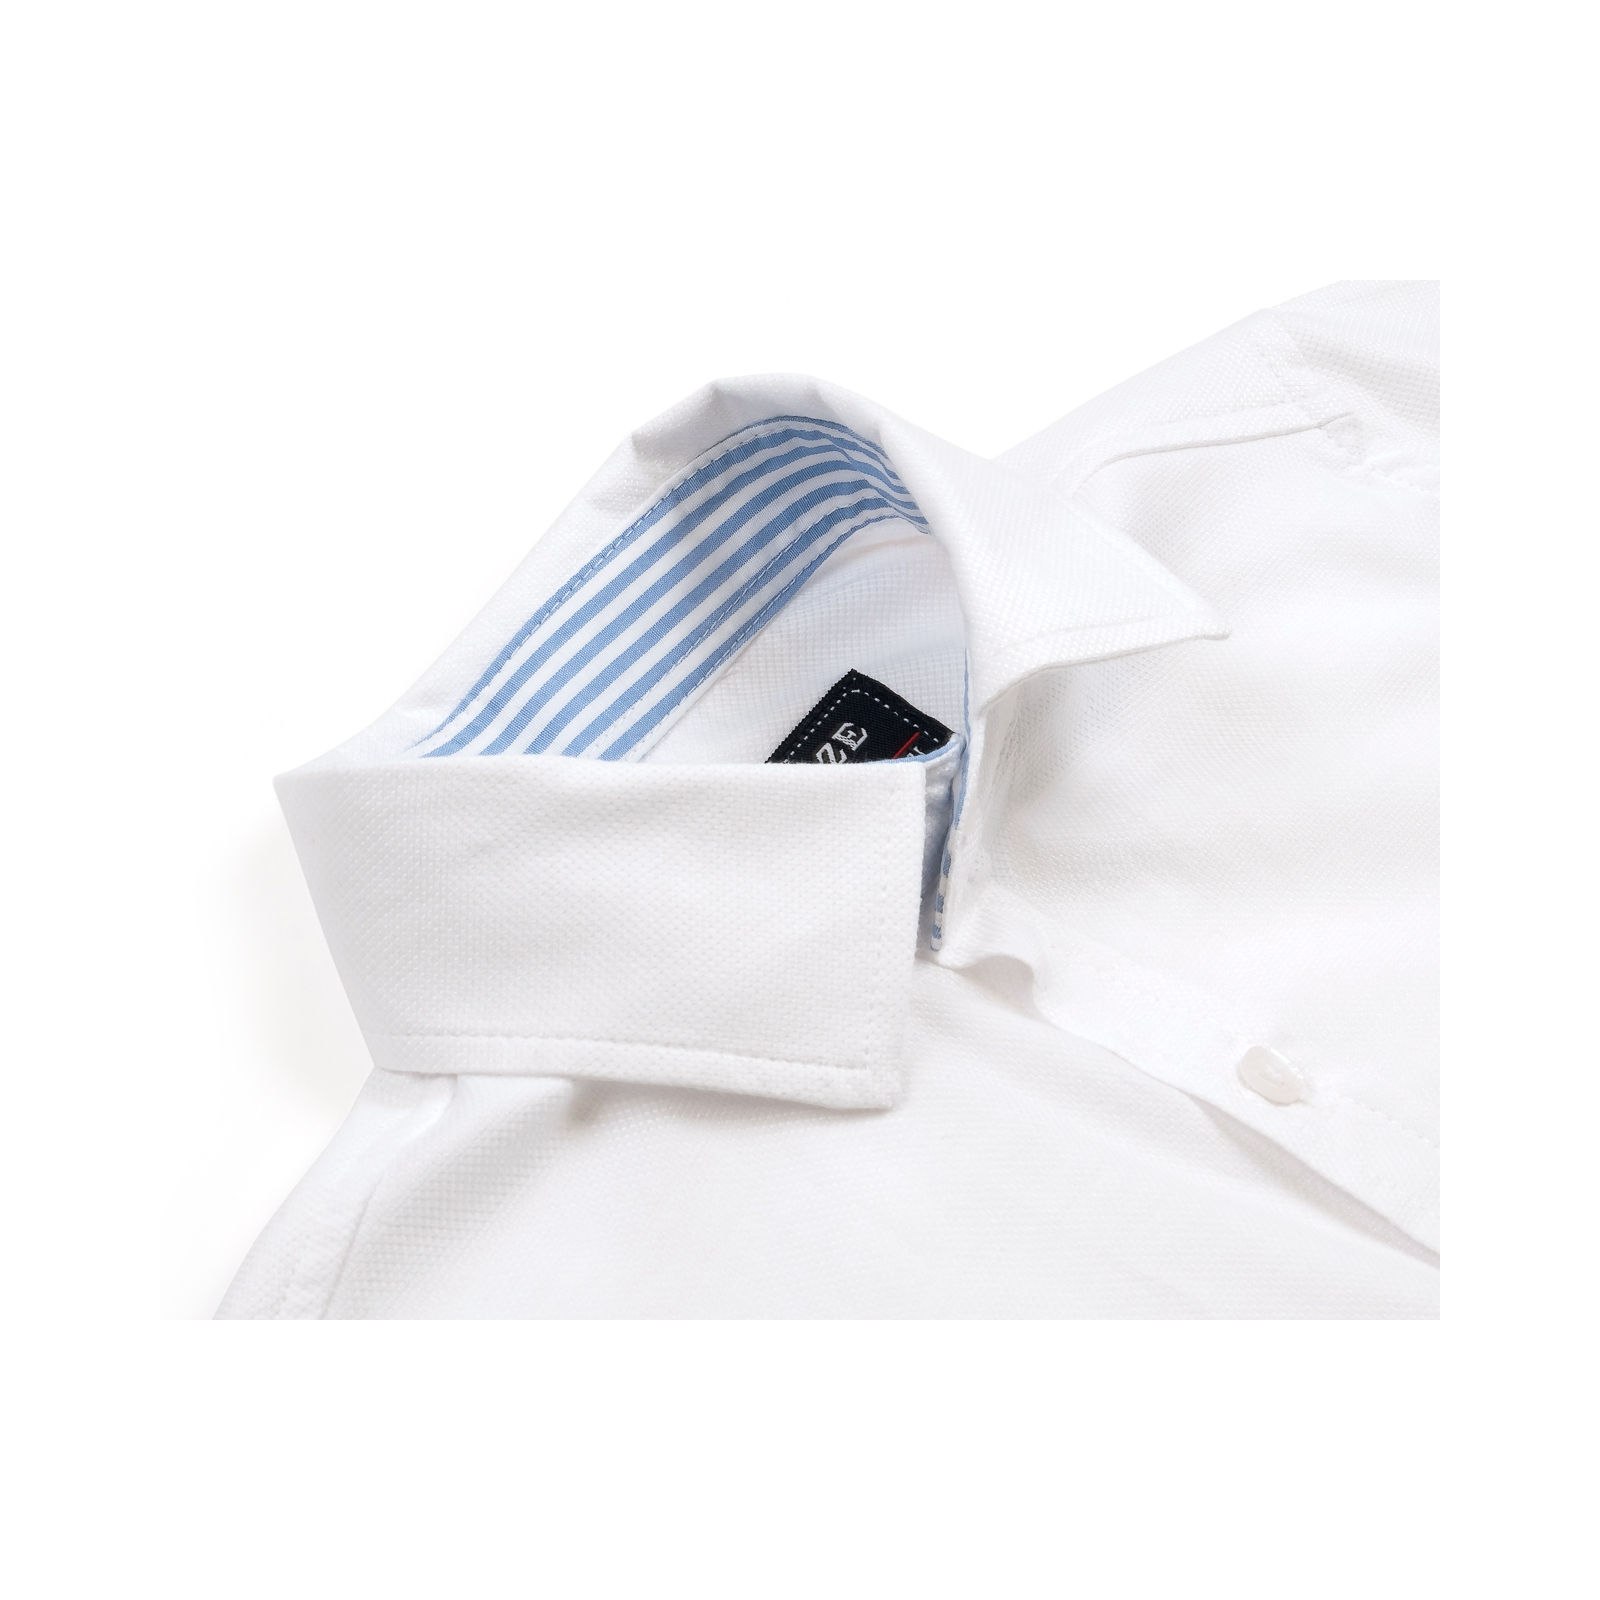 Рубашка Breeze для школы (G-326-140B-white) изображение 2